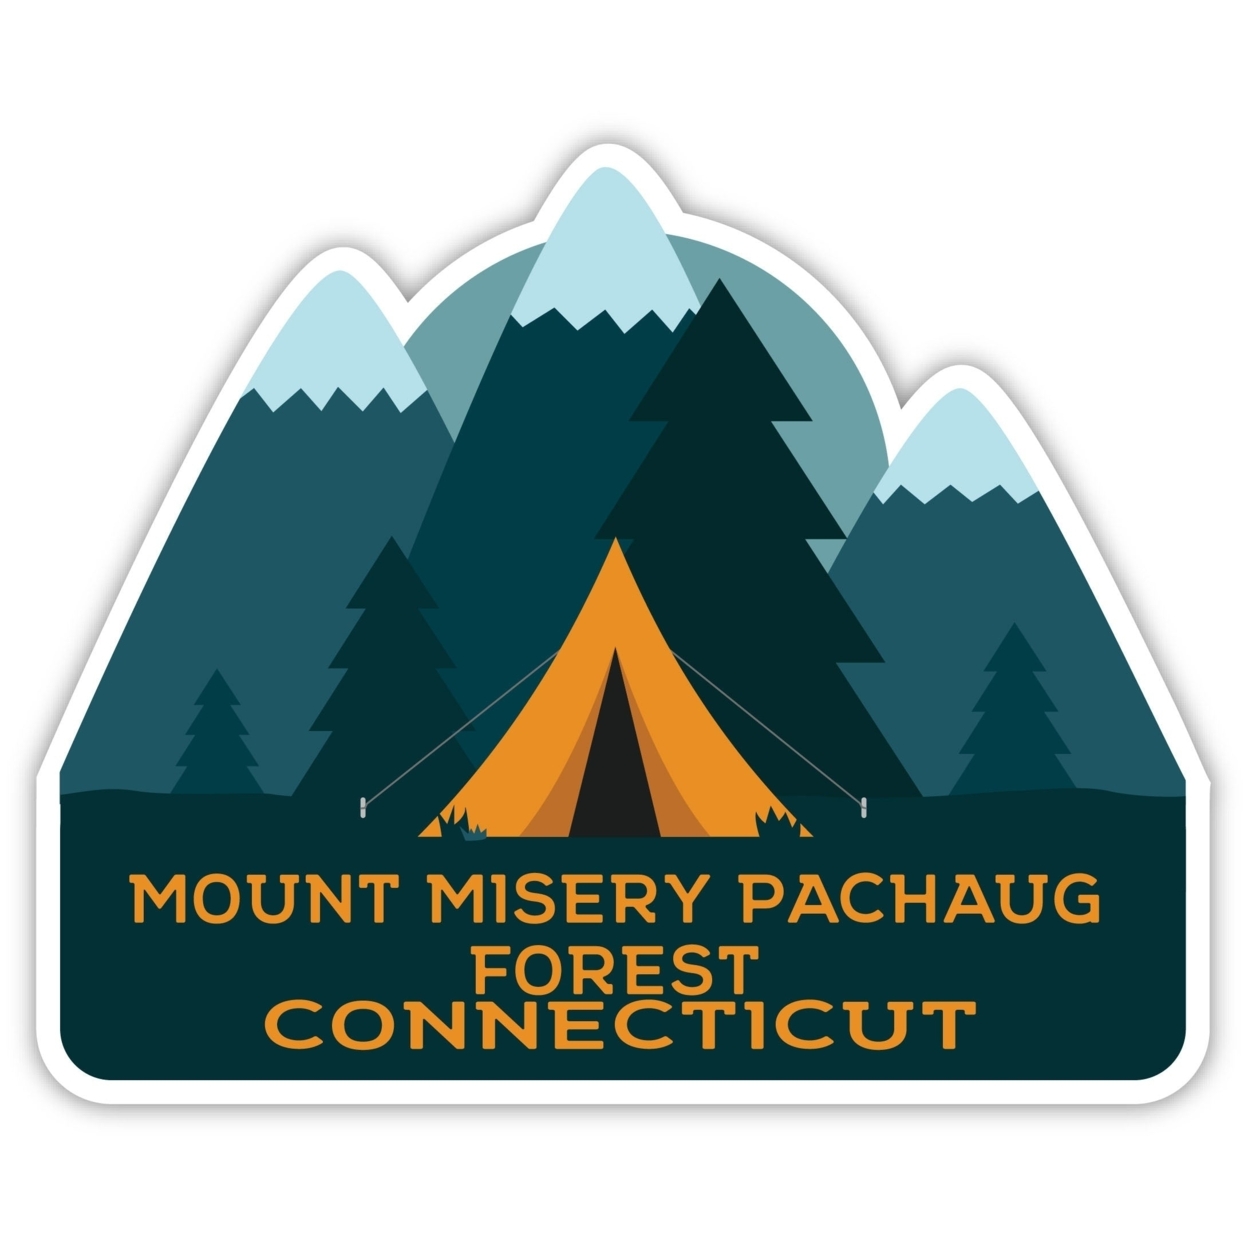 Mount Misery Pachaug Forest Connecticut Souvenir Decorative Stickers (Choose Theme And Size) - Single Unit, 2-Inch, Bear